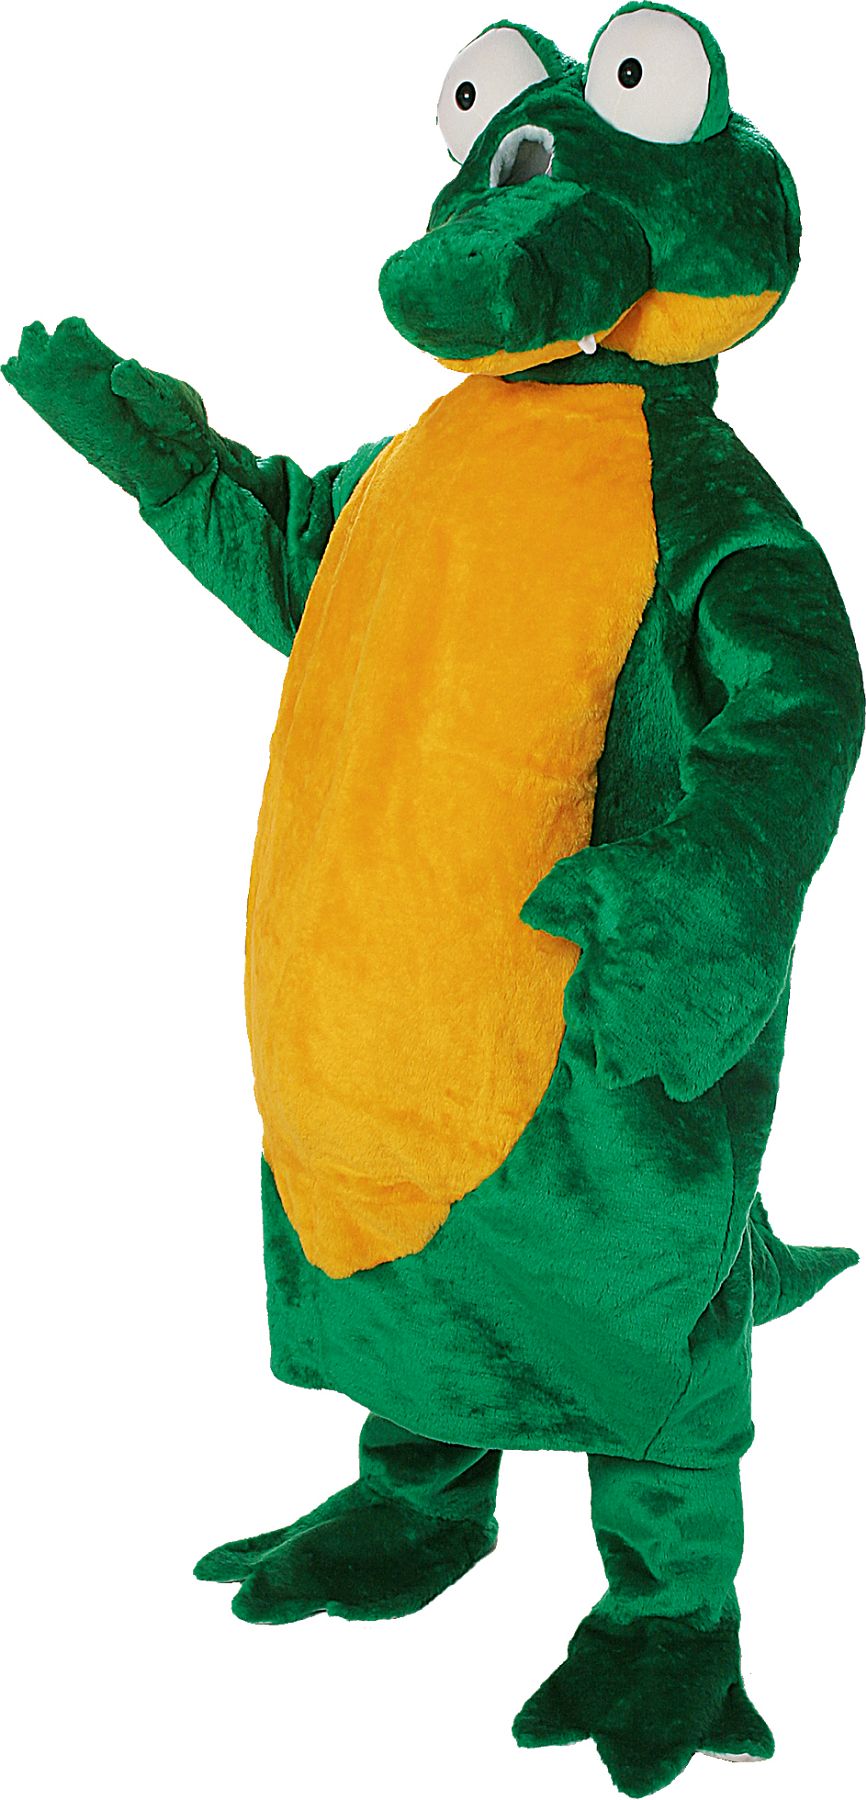 Big crocodile overall with head